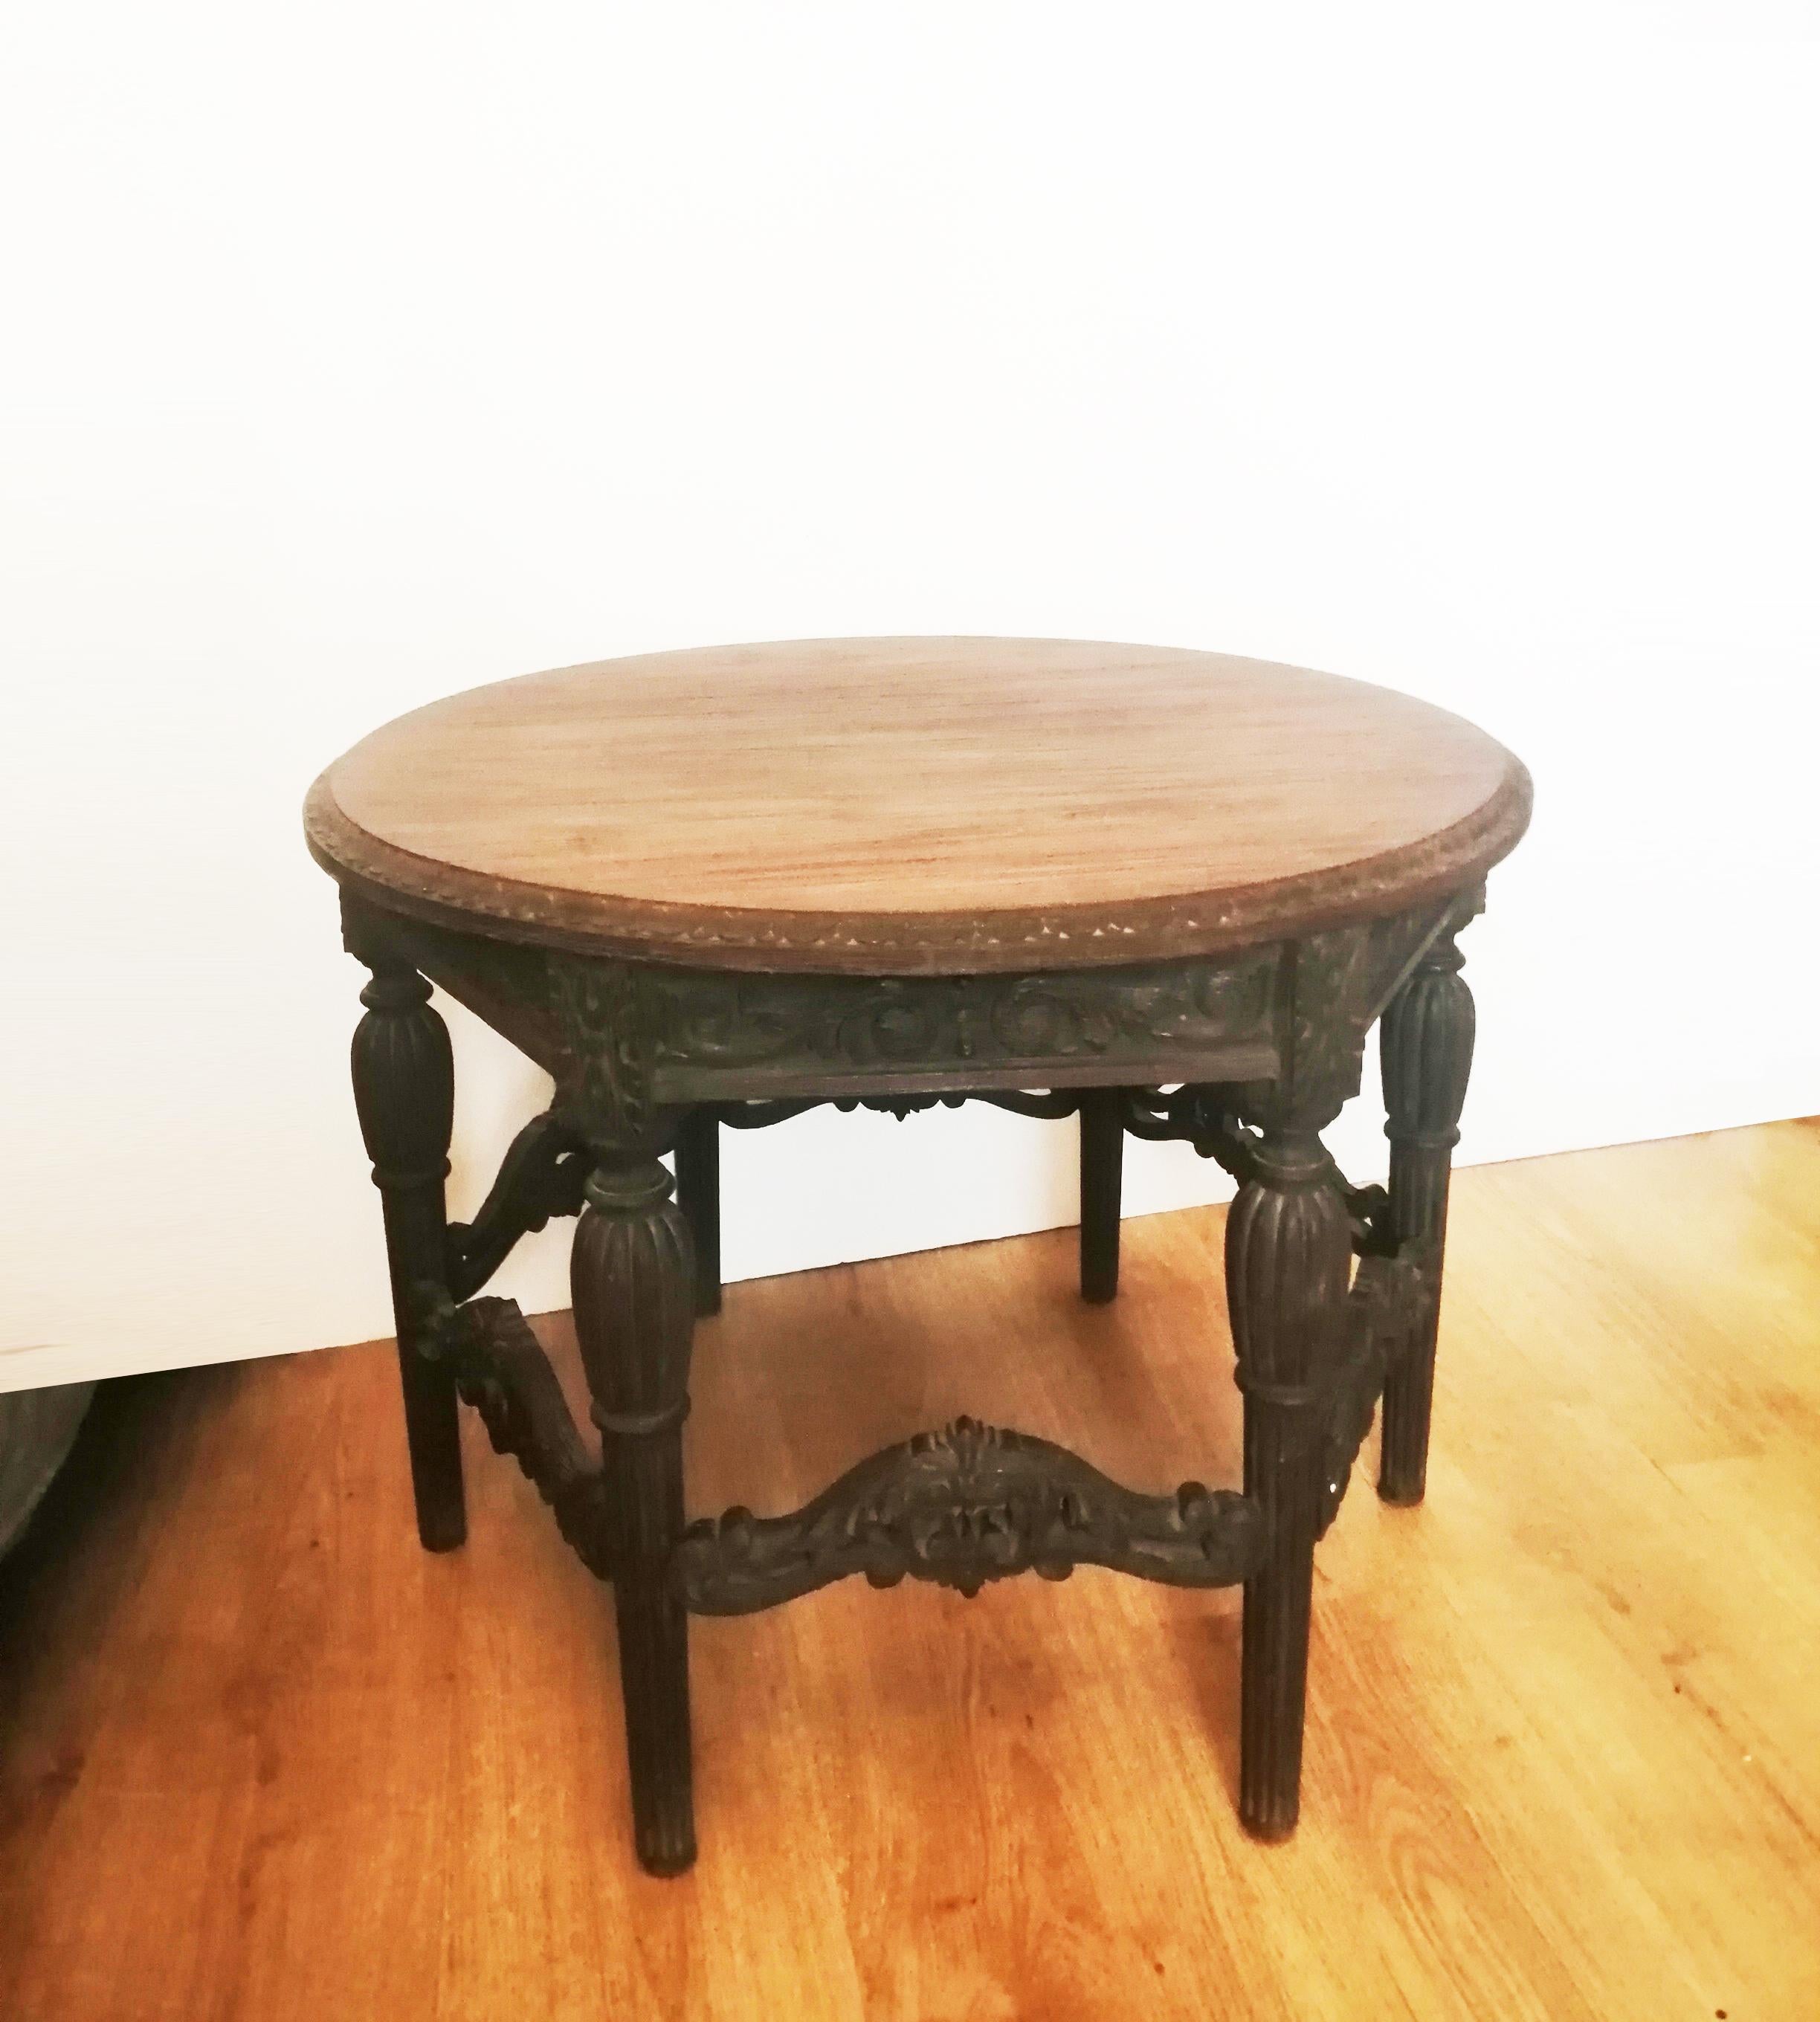 English Antique Round Table Renaissance Revival 19th Century For Sale